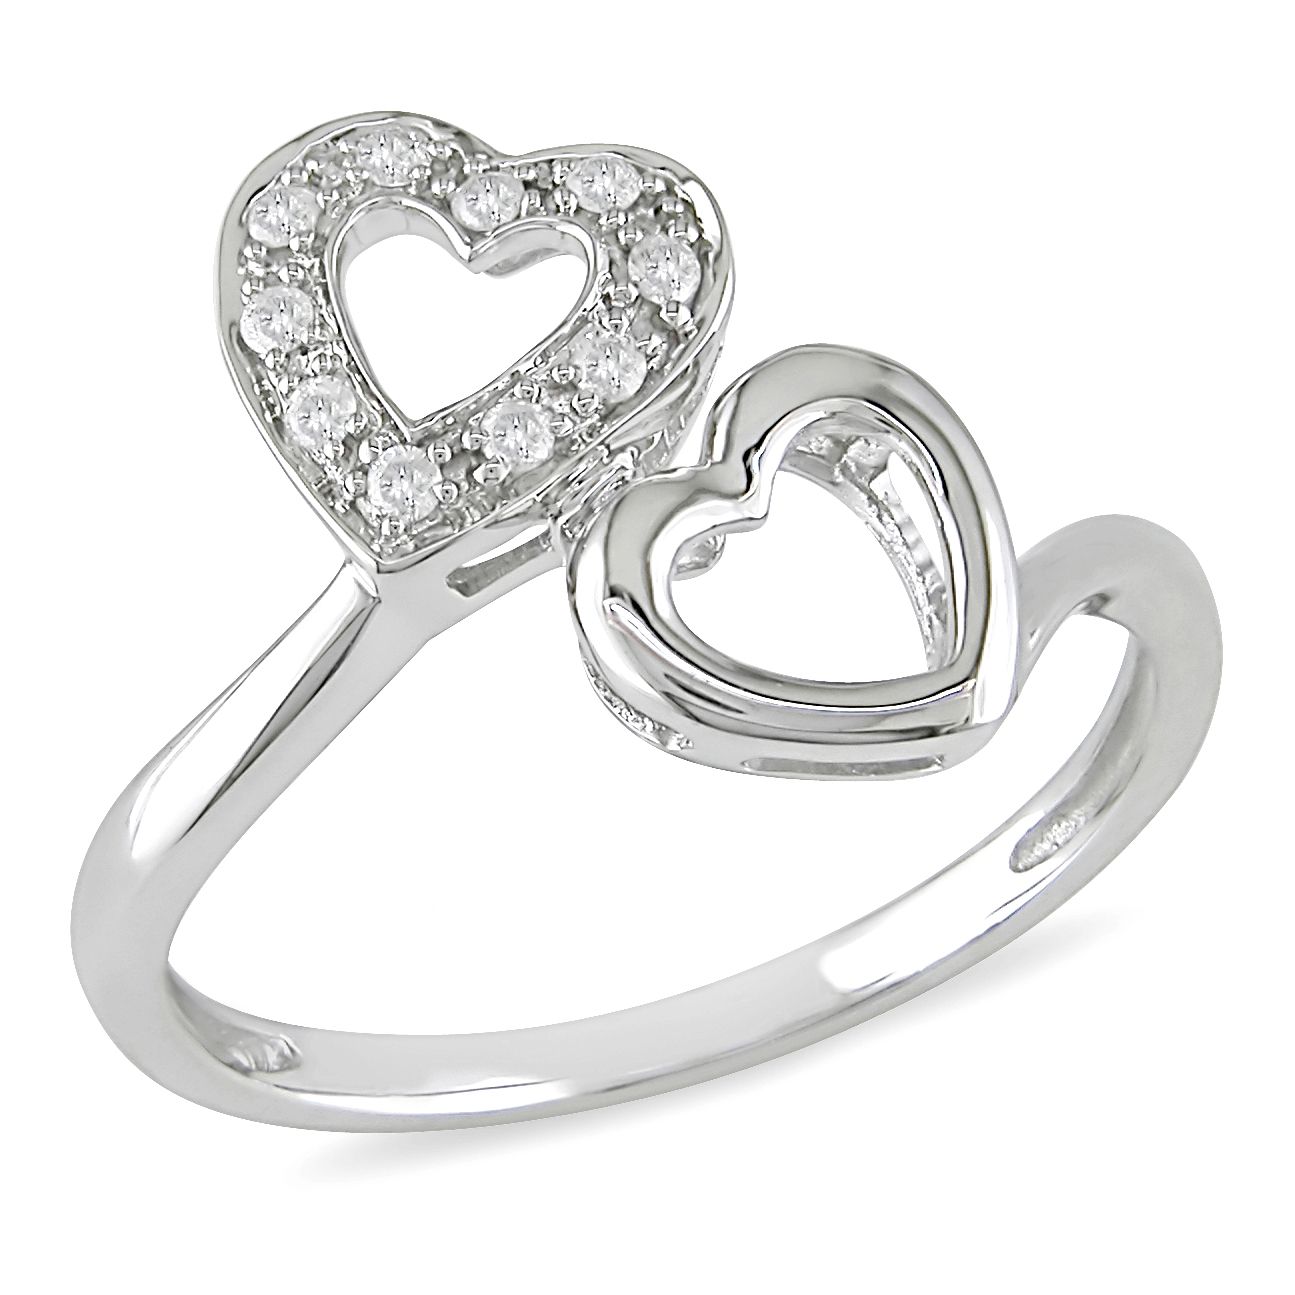 1/10 CTTW Diamond Fashion Ring Set in 10K White Gold (GH I2;I3)